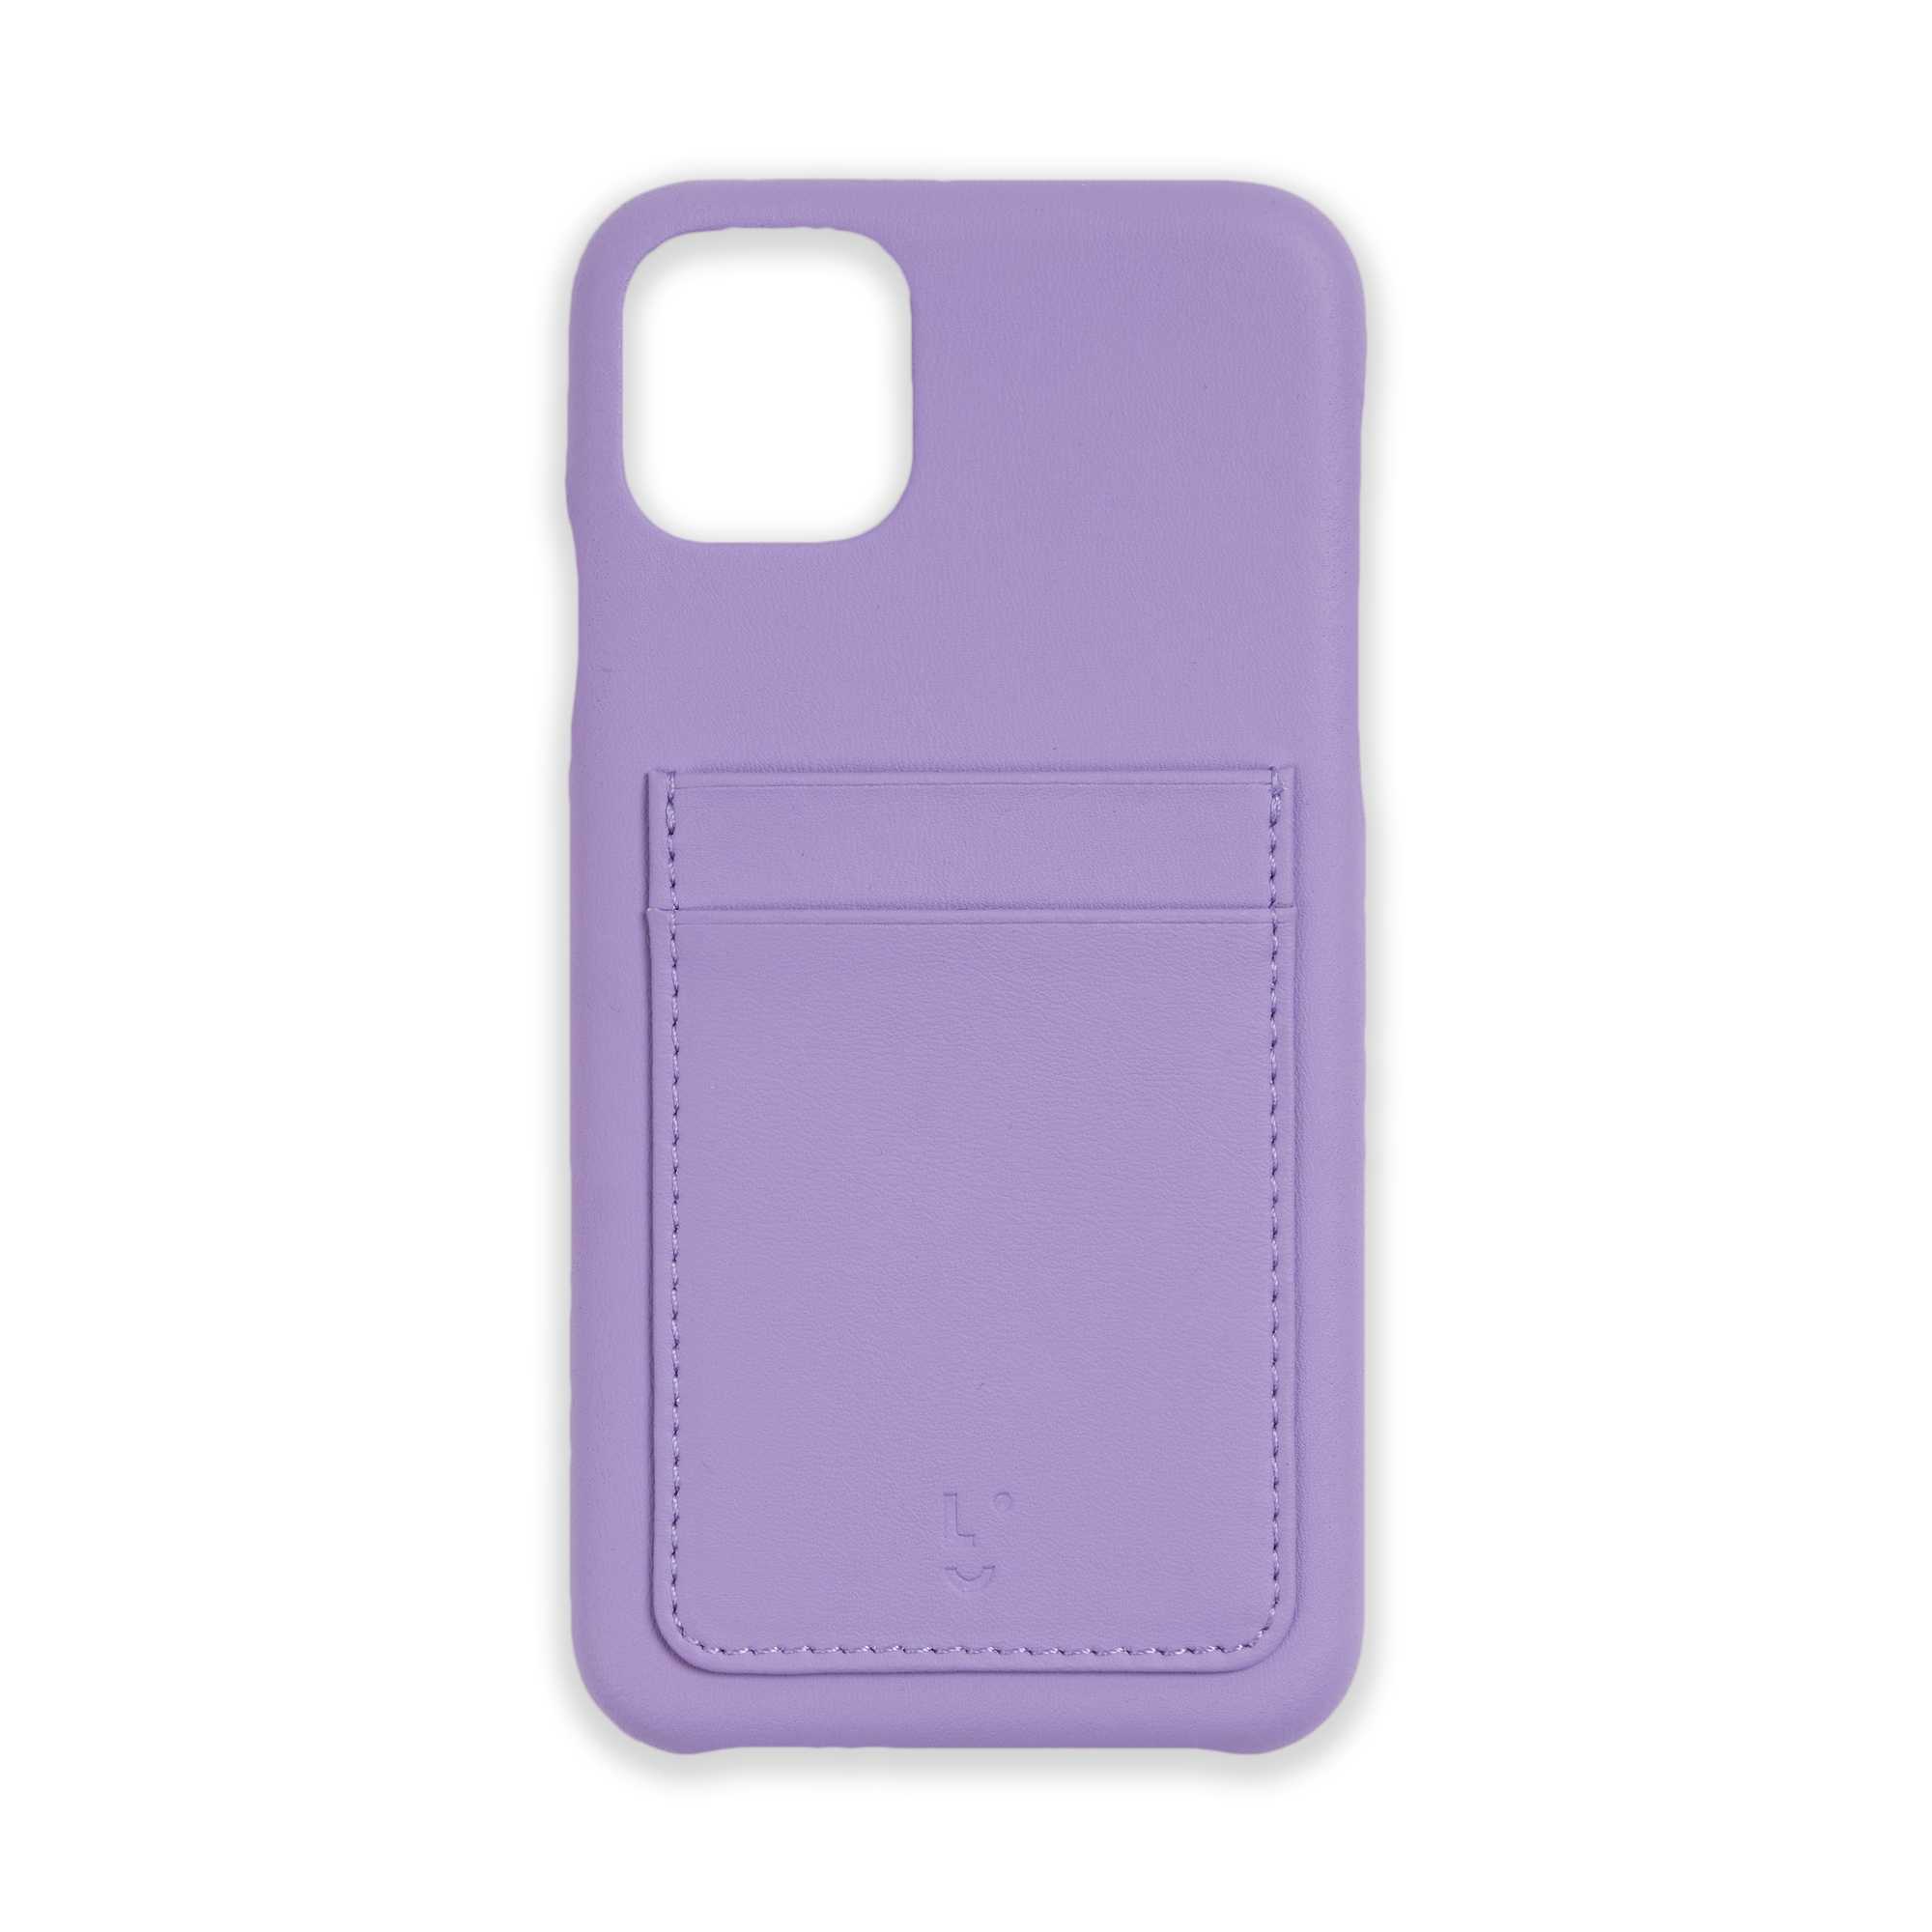 Card Holder case in Purple